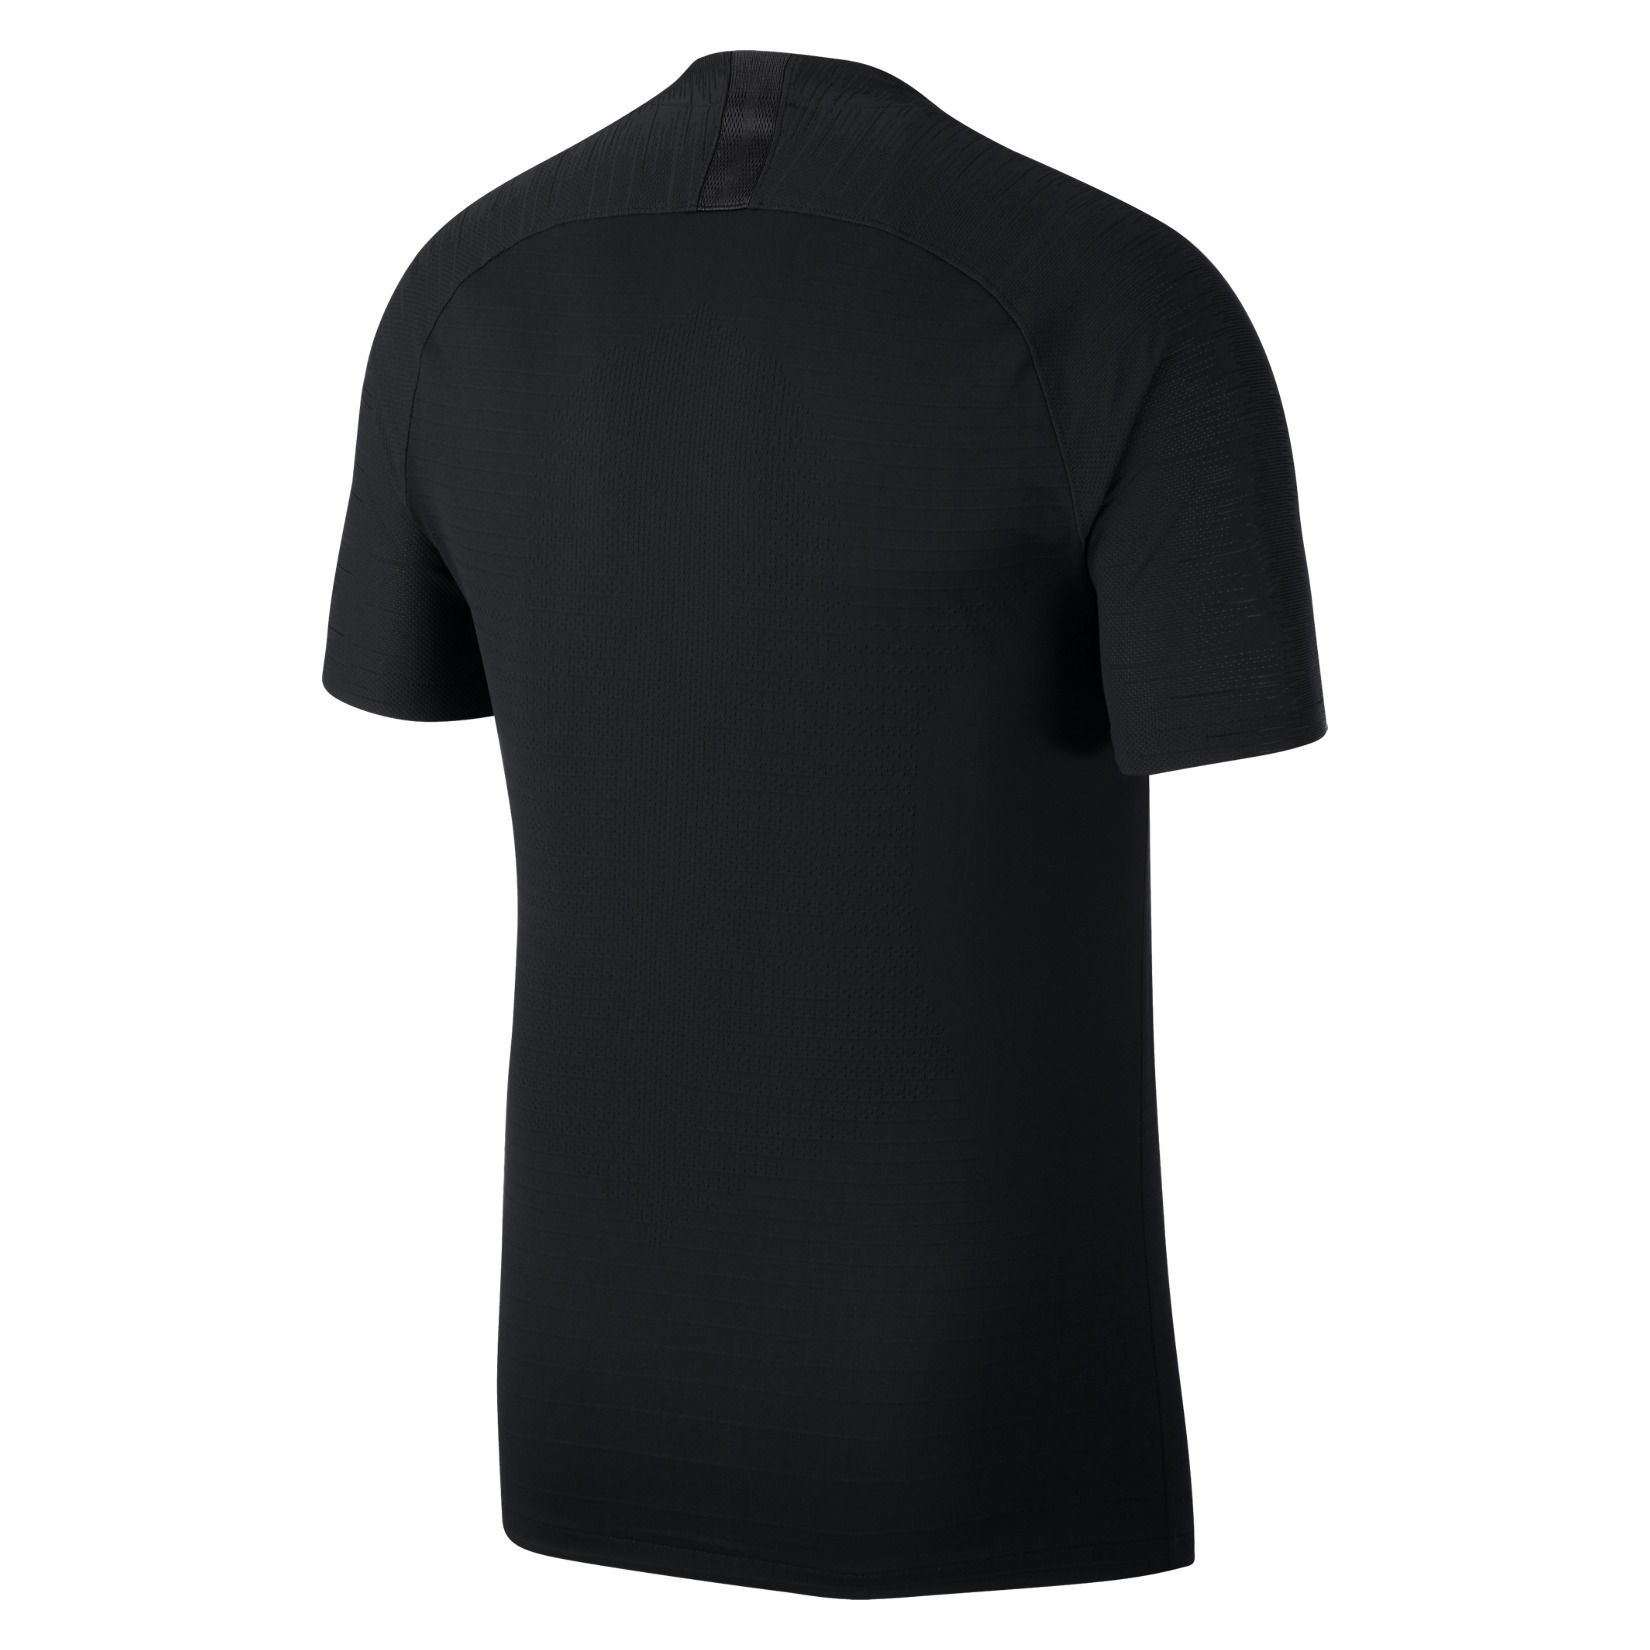 Nike Vapor Knit II Short Sleeve Shirt - Kitlocker.com